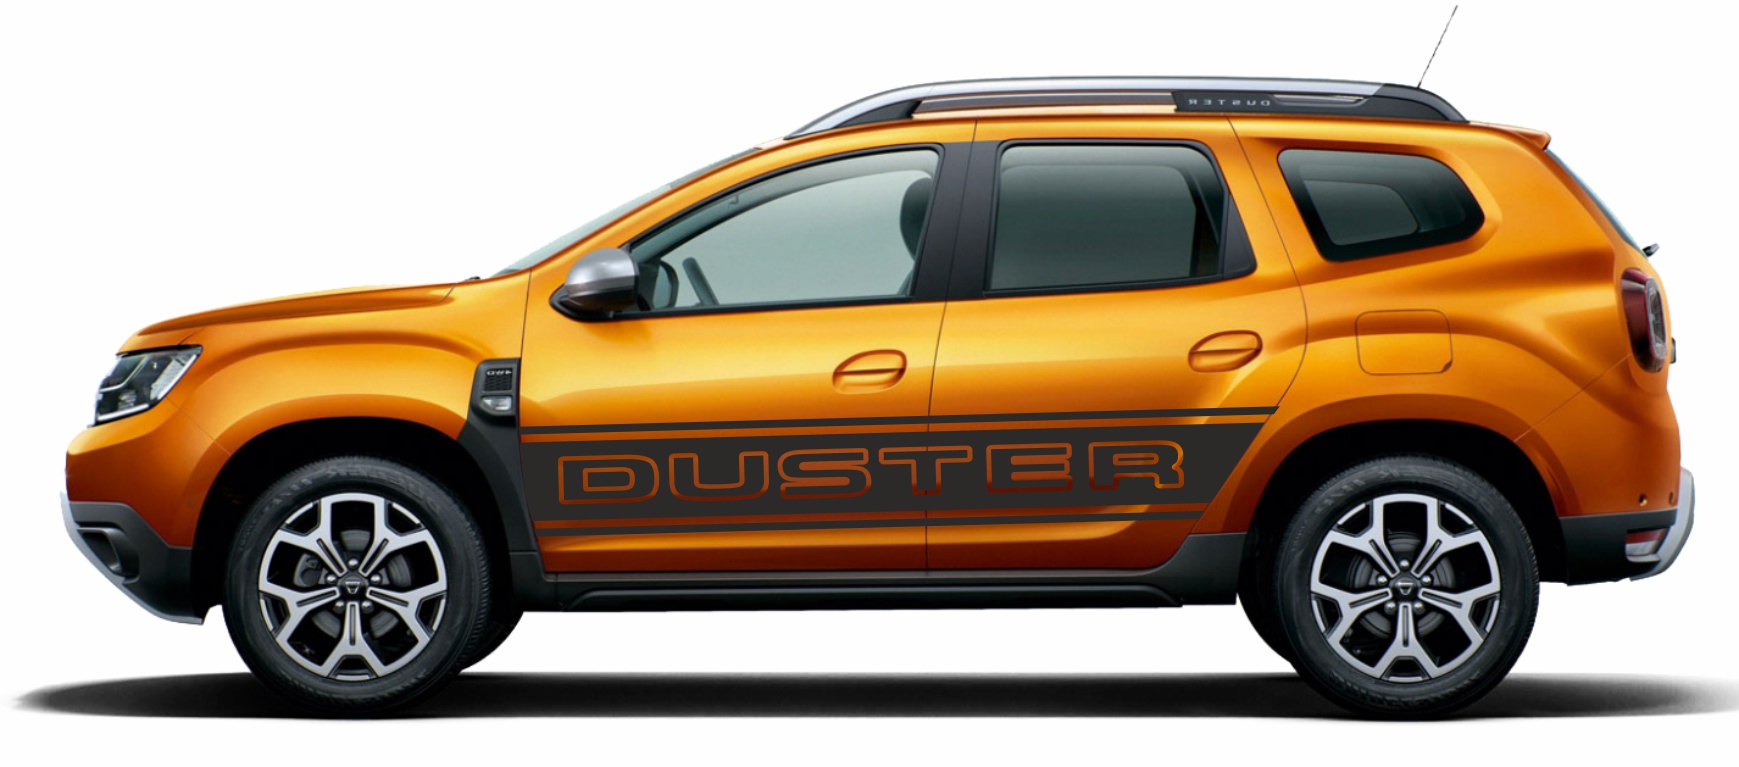 Dacia Duster naklejki decals stripes sticker aufkleber nalepky samolepky